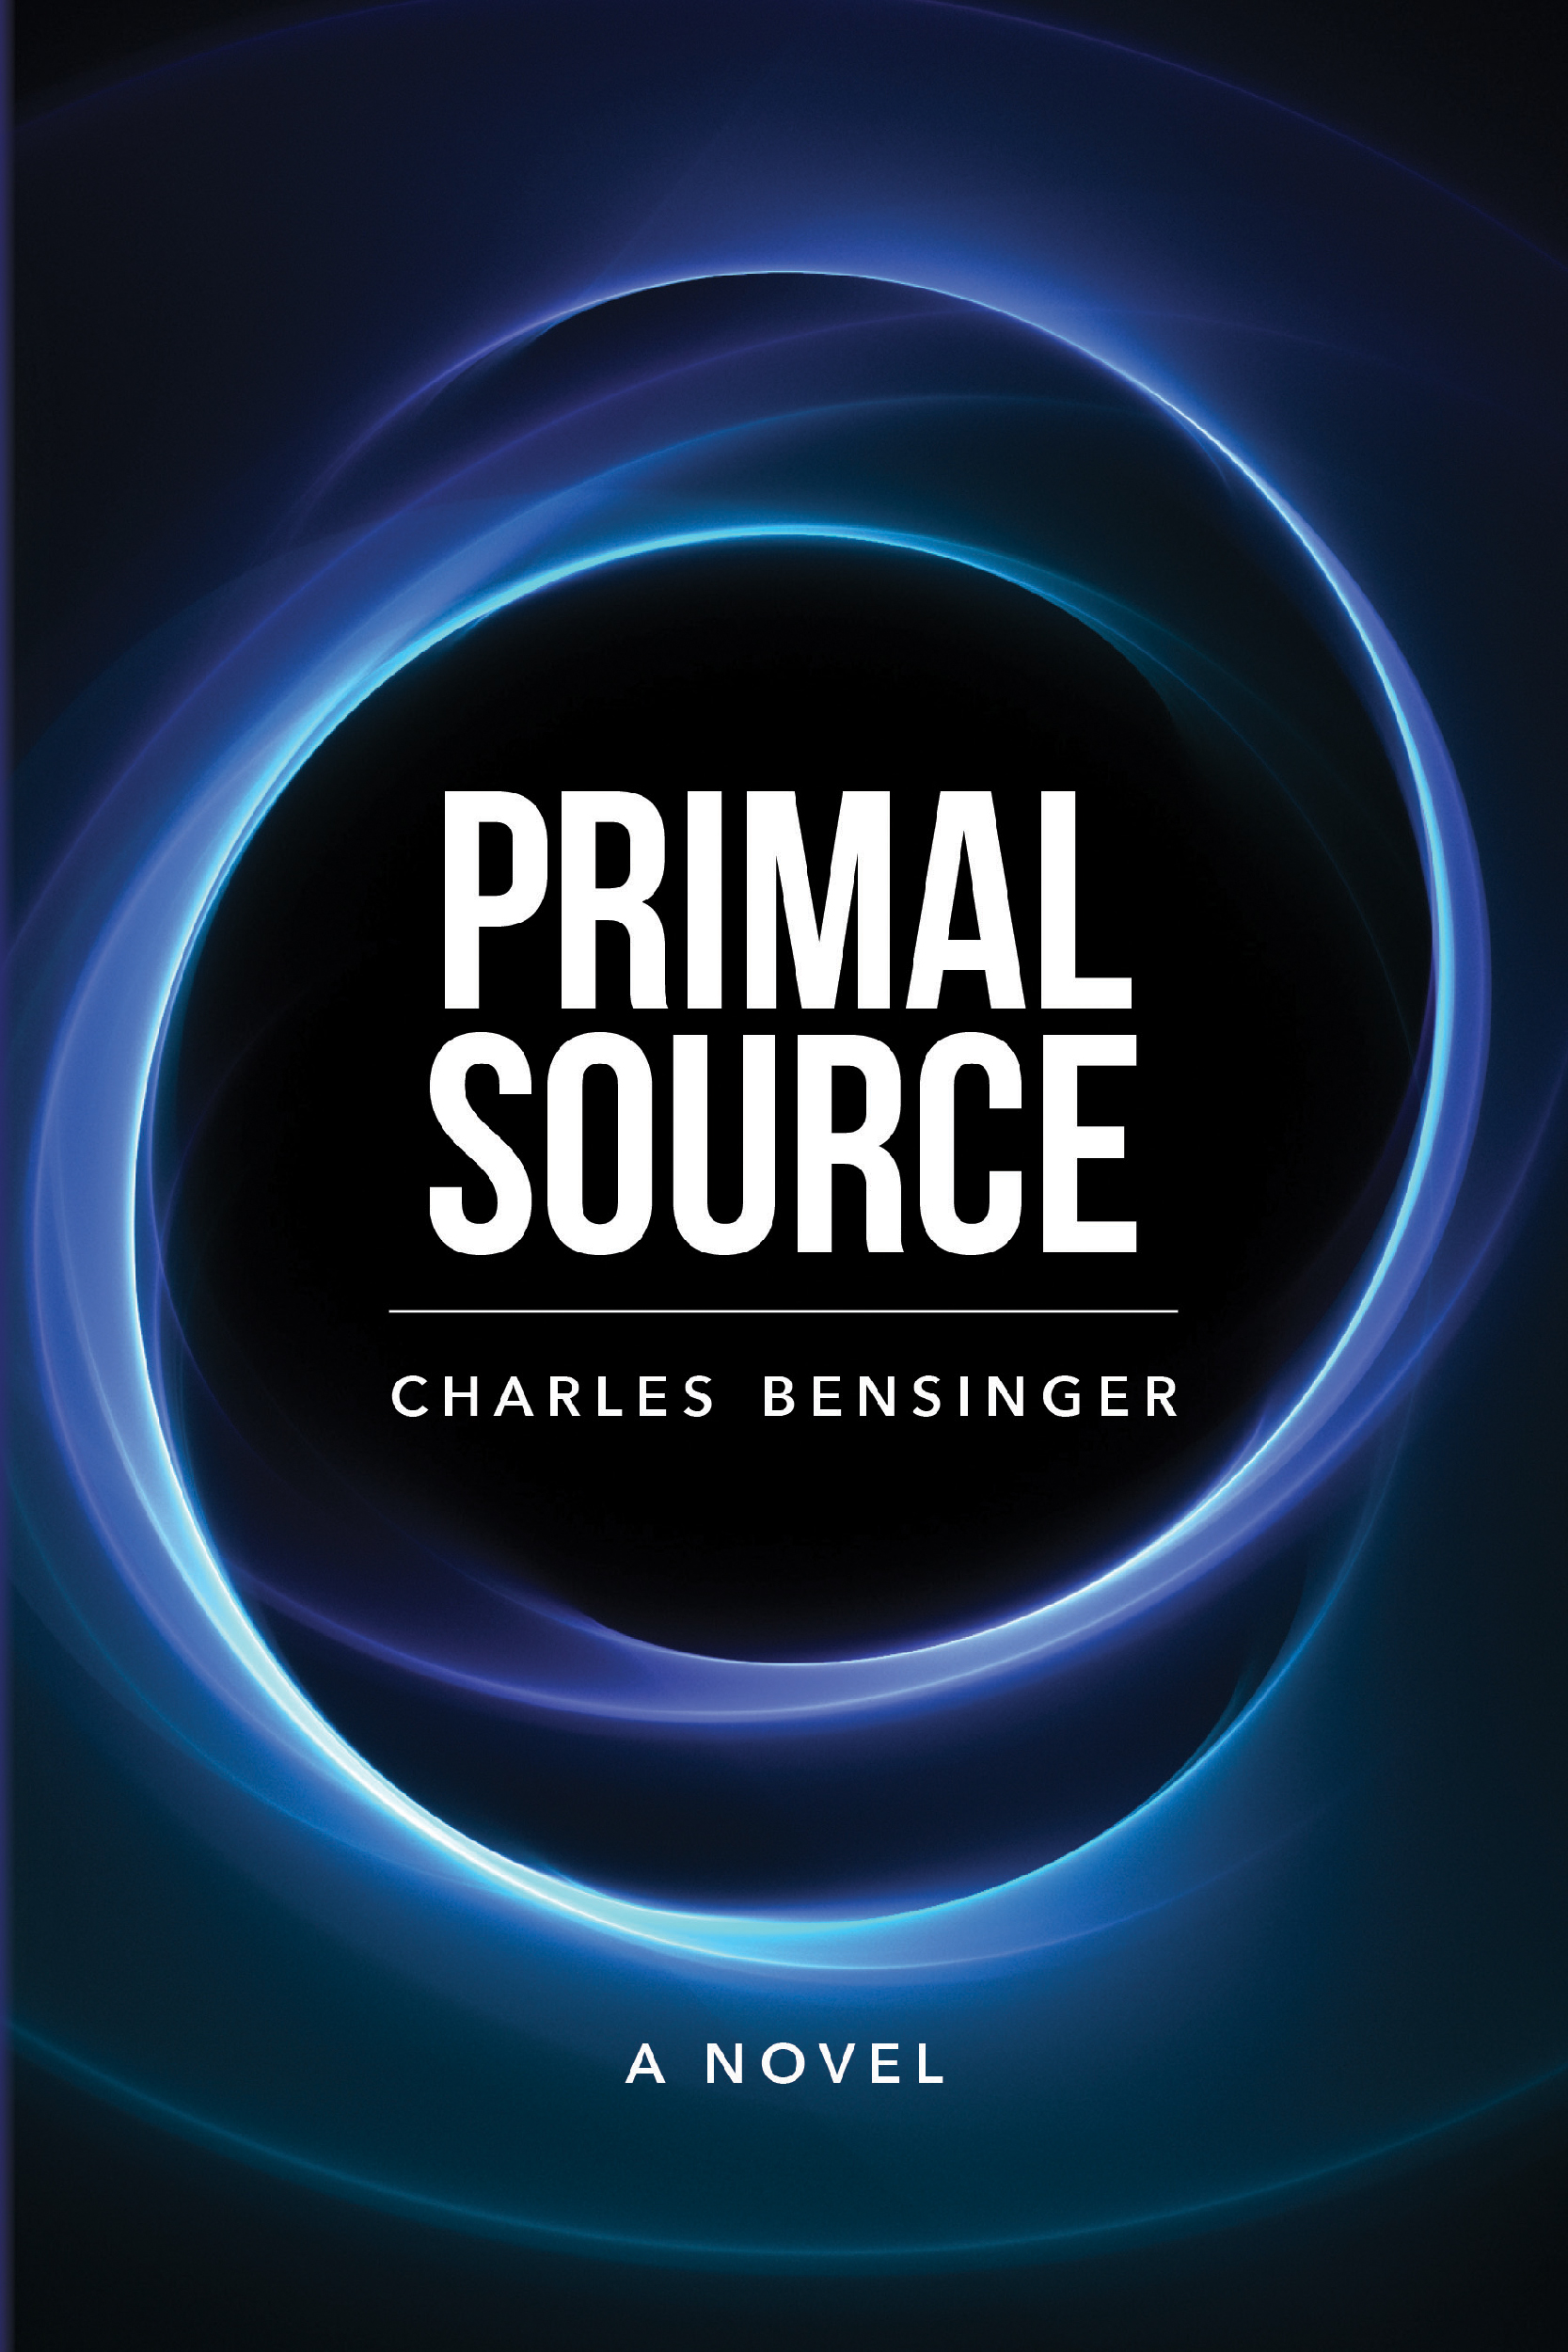 Primal Source